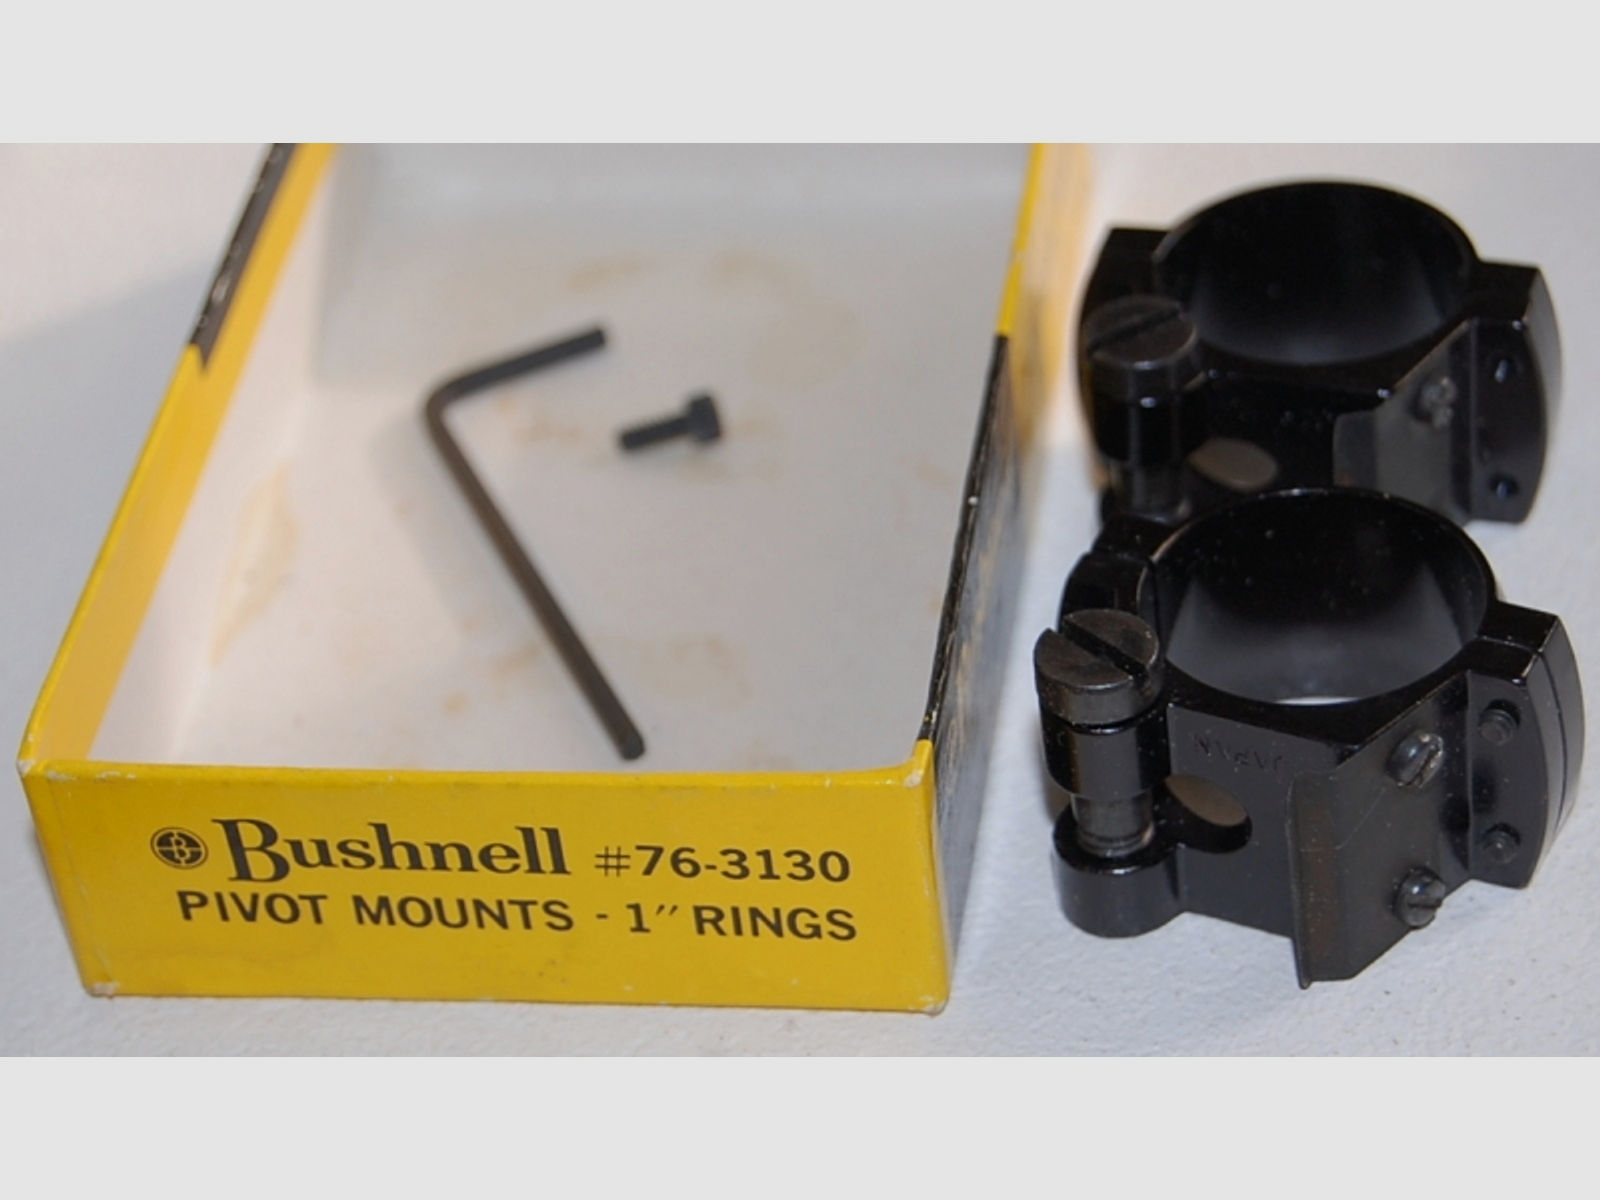 Bushnell Pivot Mounts -1" Rings #76-3130